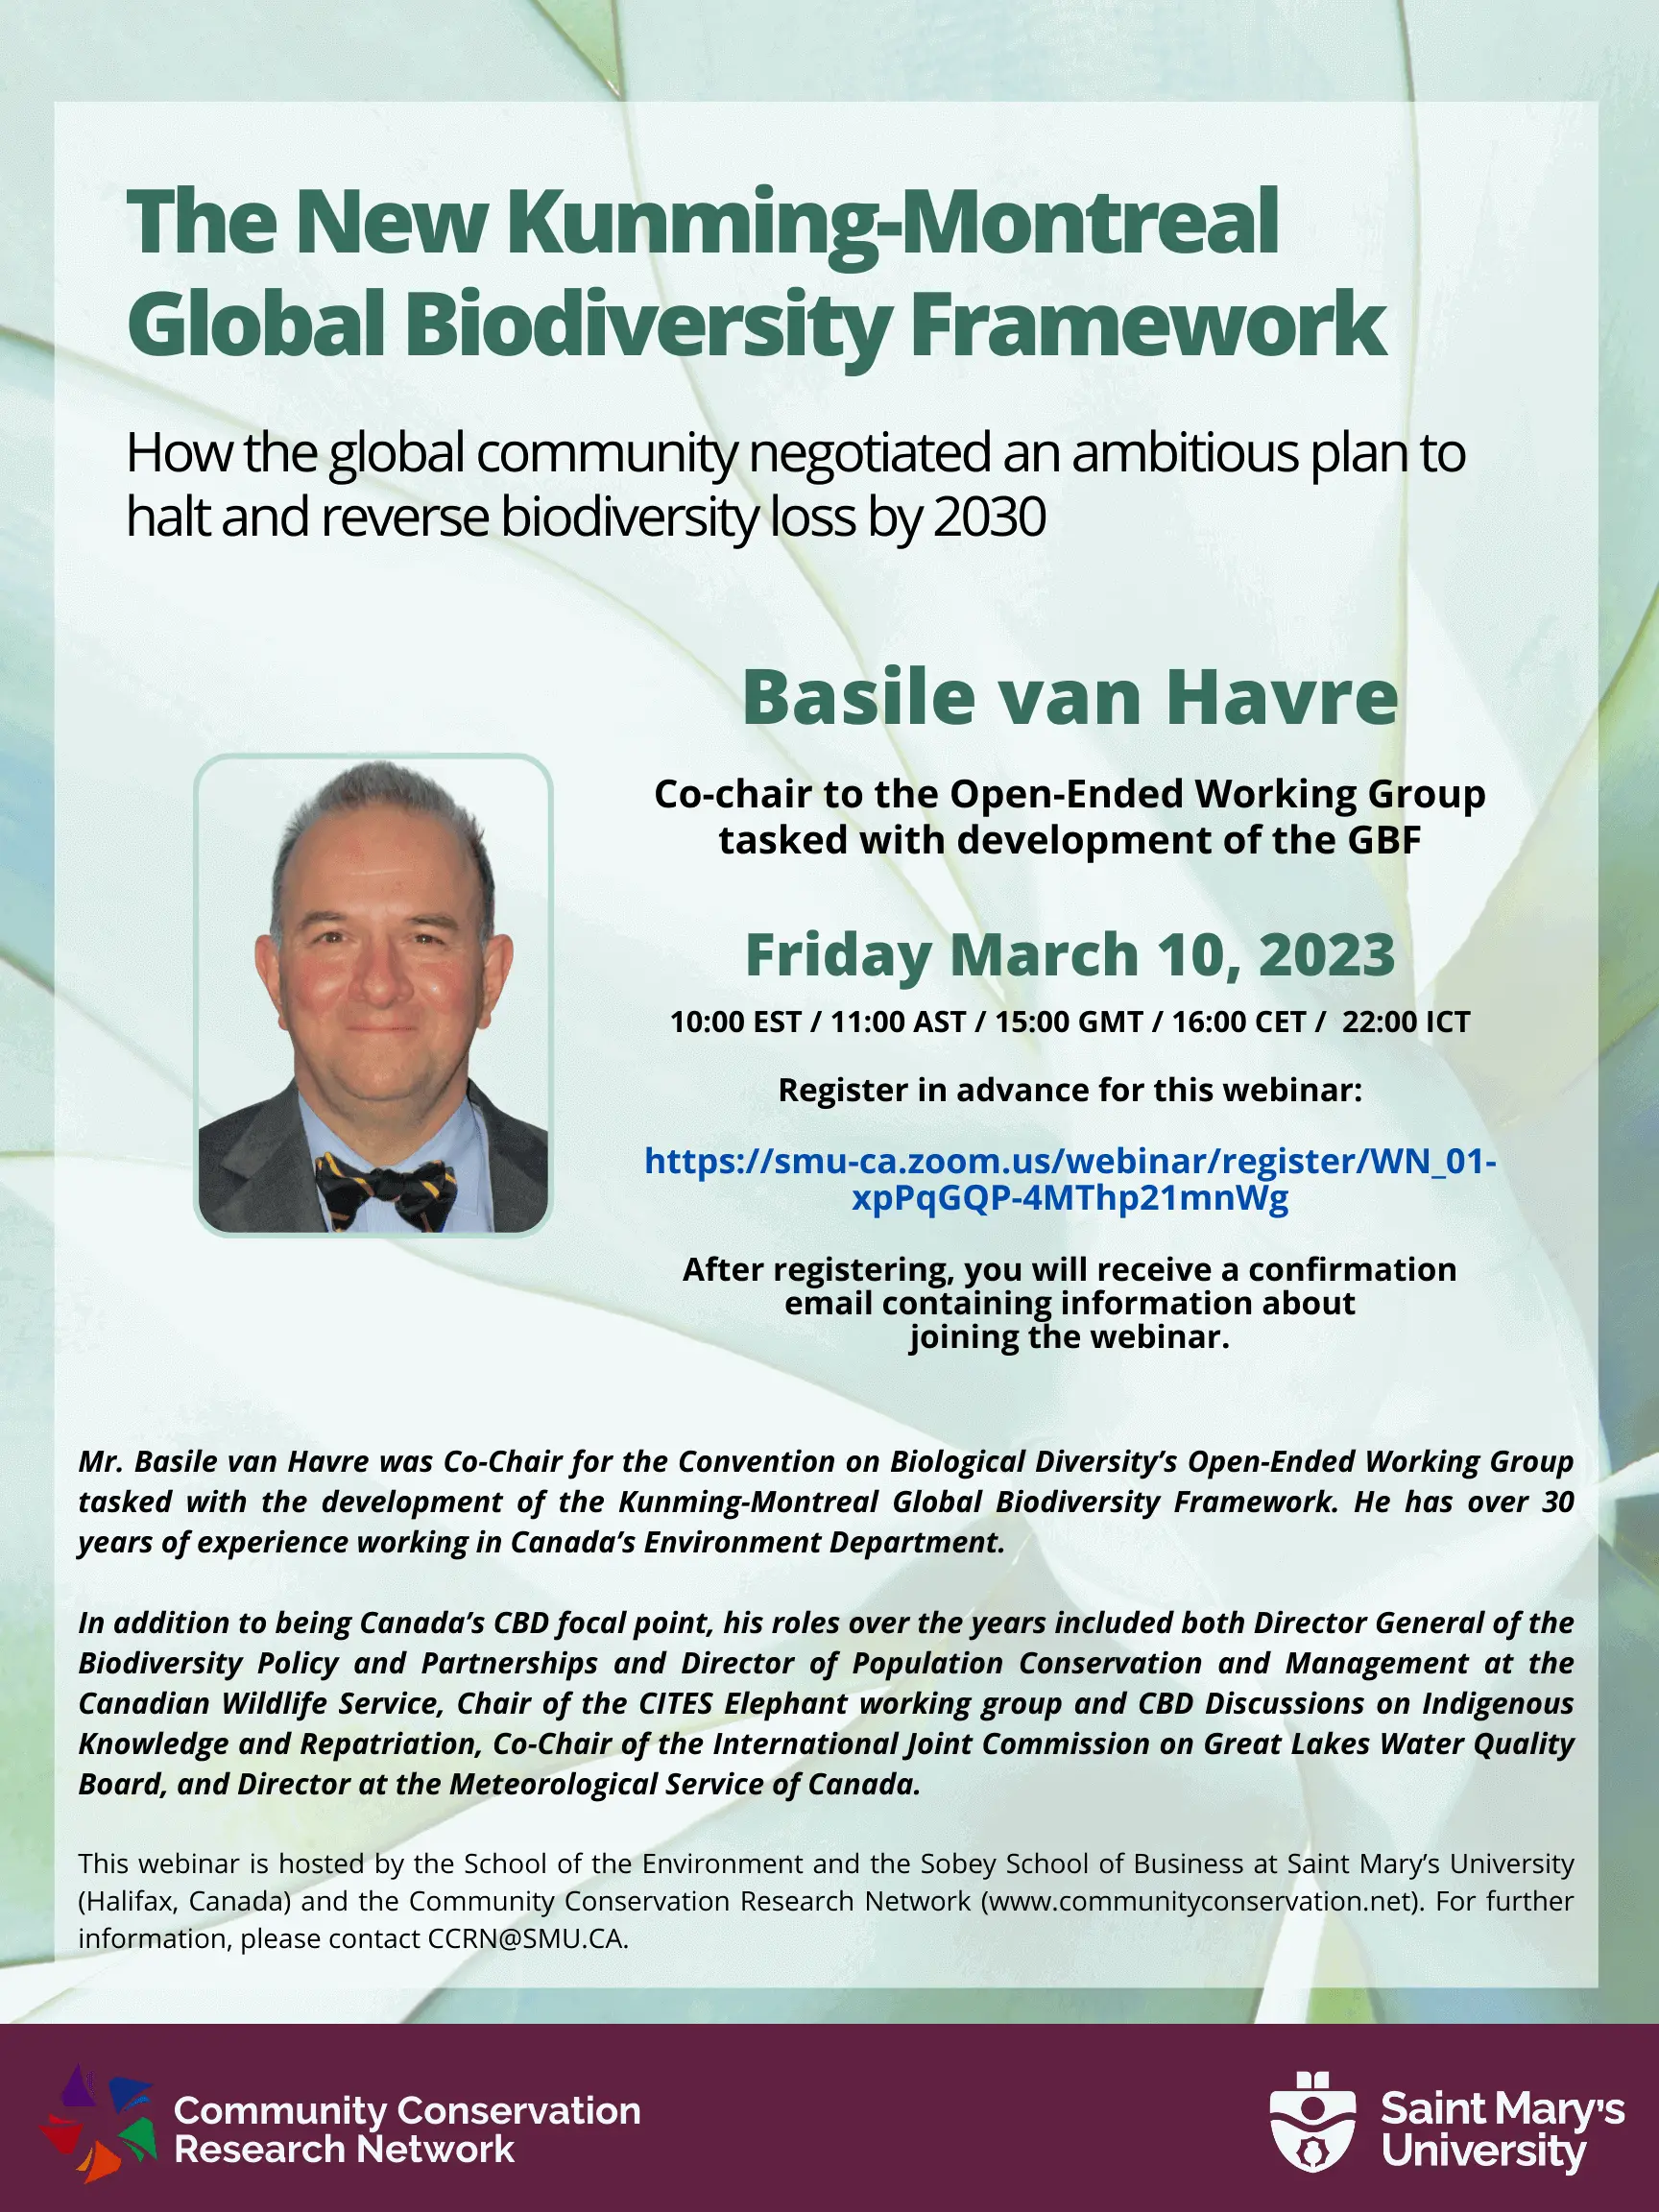 Upcoming webinar on the new Kunming-Montreal Global Biodiversity Framework - events